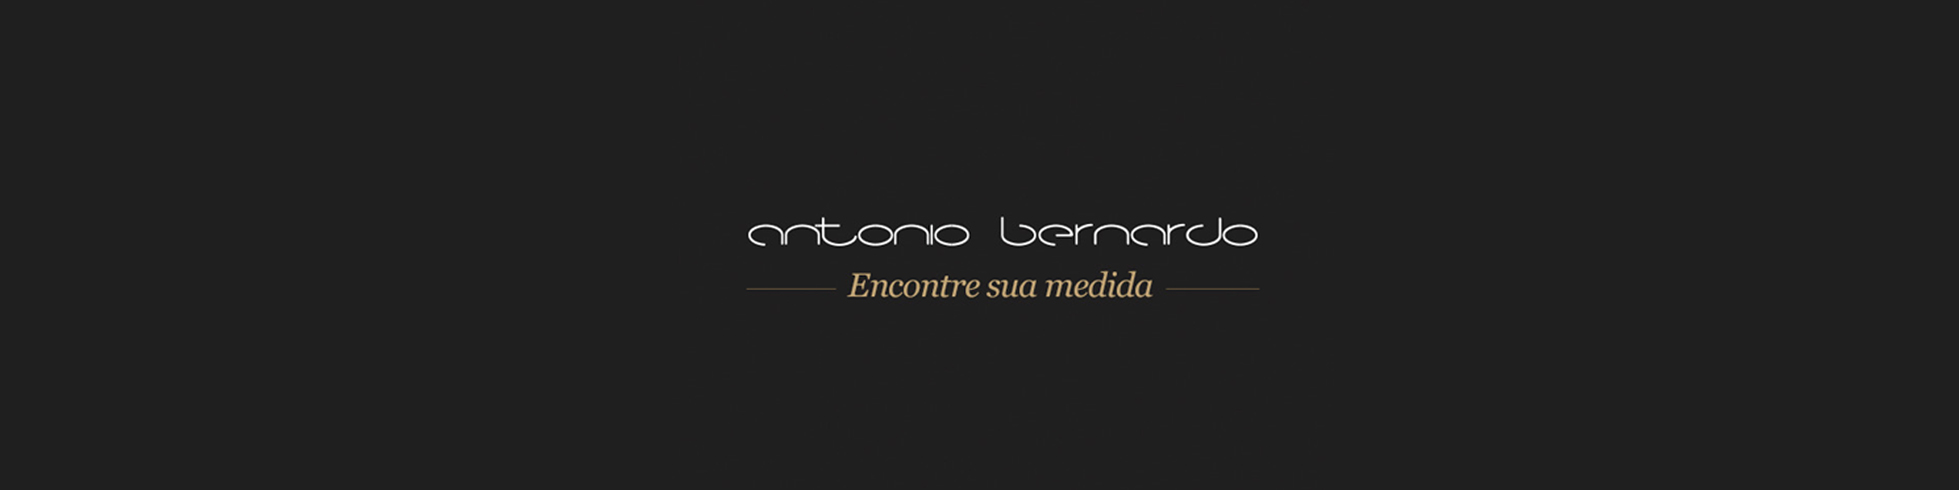 Slider portfólio aplicativos Android e iOS Antonio Bernardo